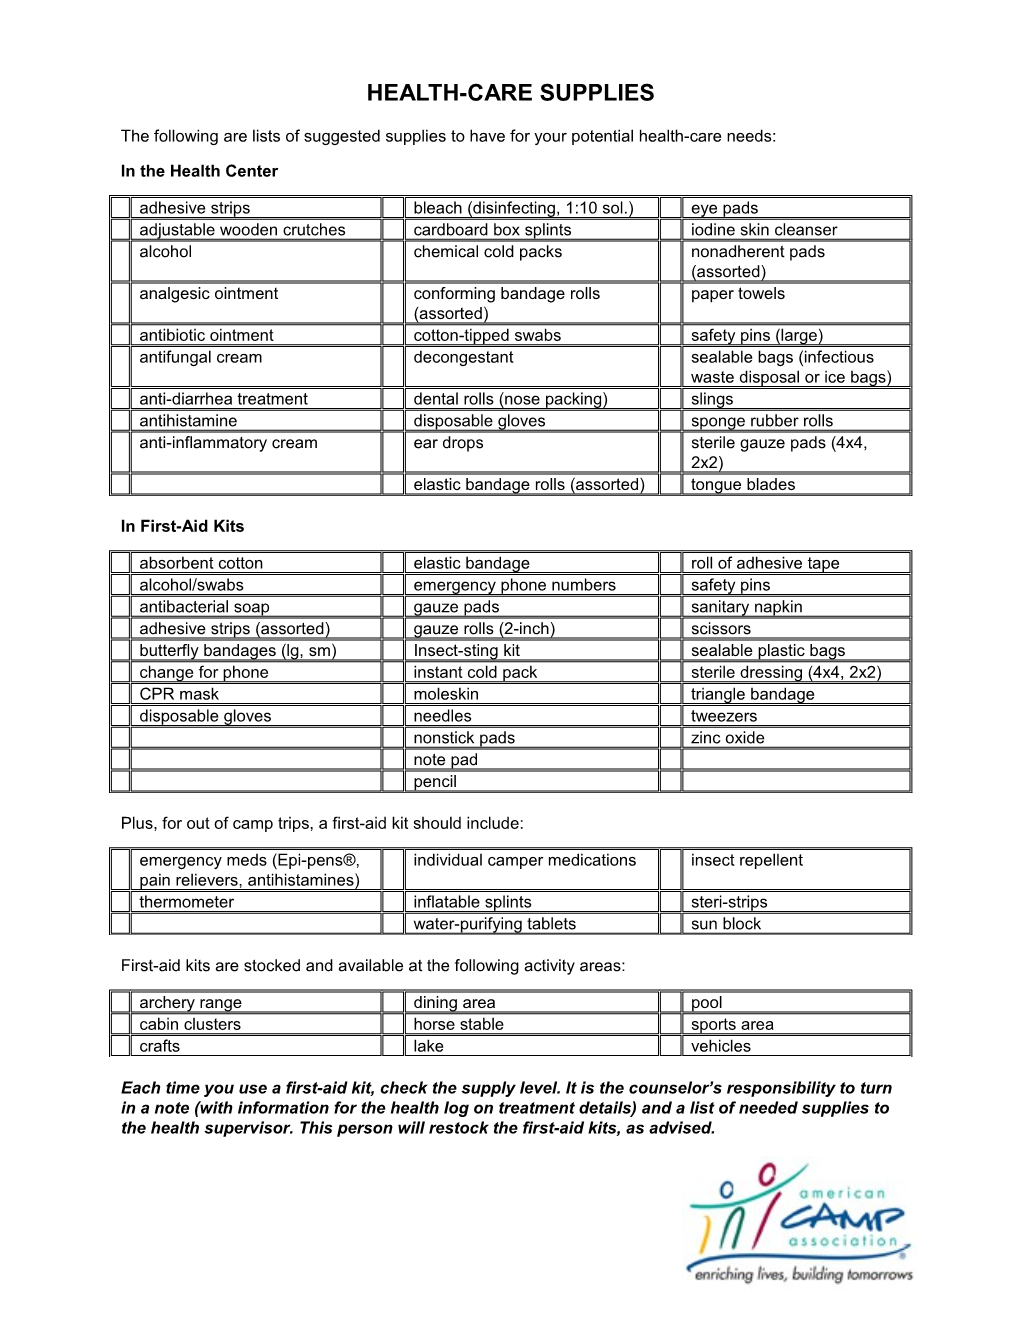 Health Care Supply Checklist